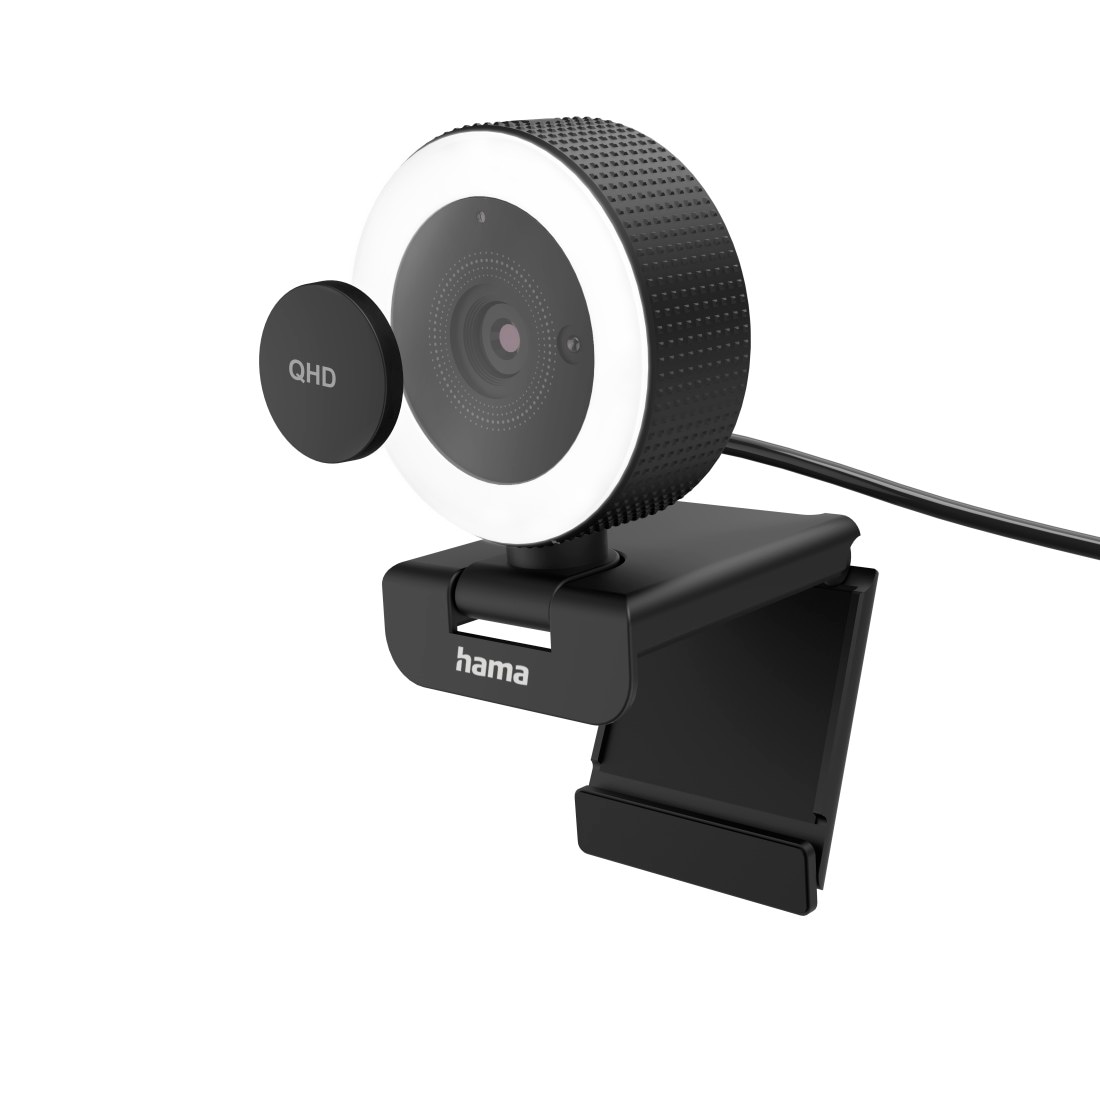 HAMA Full HD-Webcam "PC Kamera, Webcam mit Ringlicht und Fernbedienung, Streaming, Gaming" Camcorder Beleuchtung, Neigbar, Drehbar, Mikrofon, LED Stat